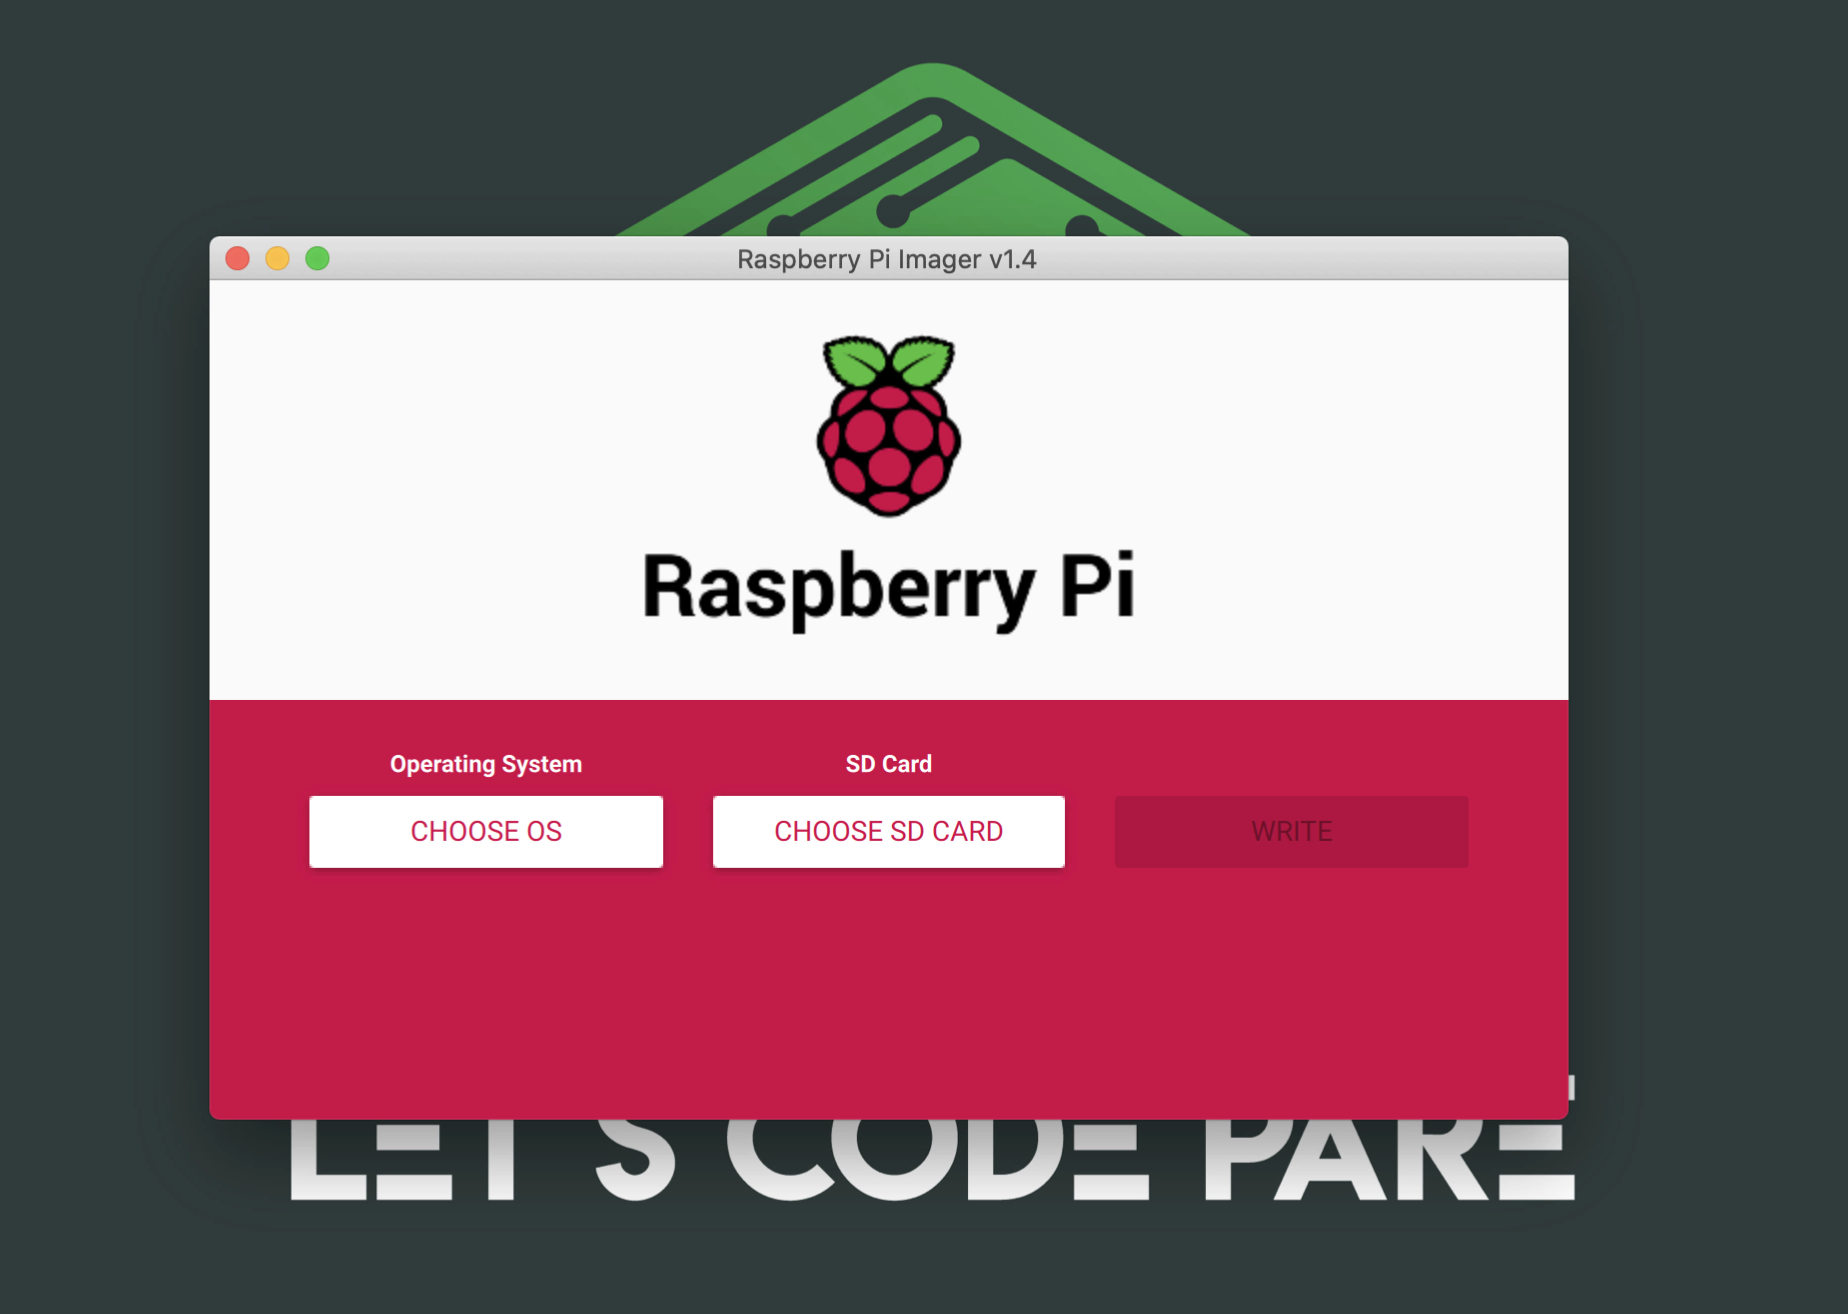  Raspberry Pi Imager application